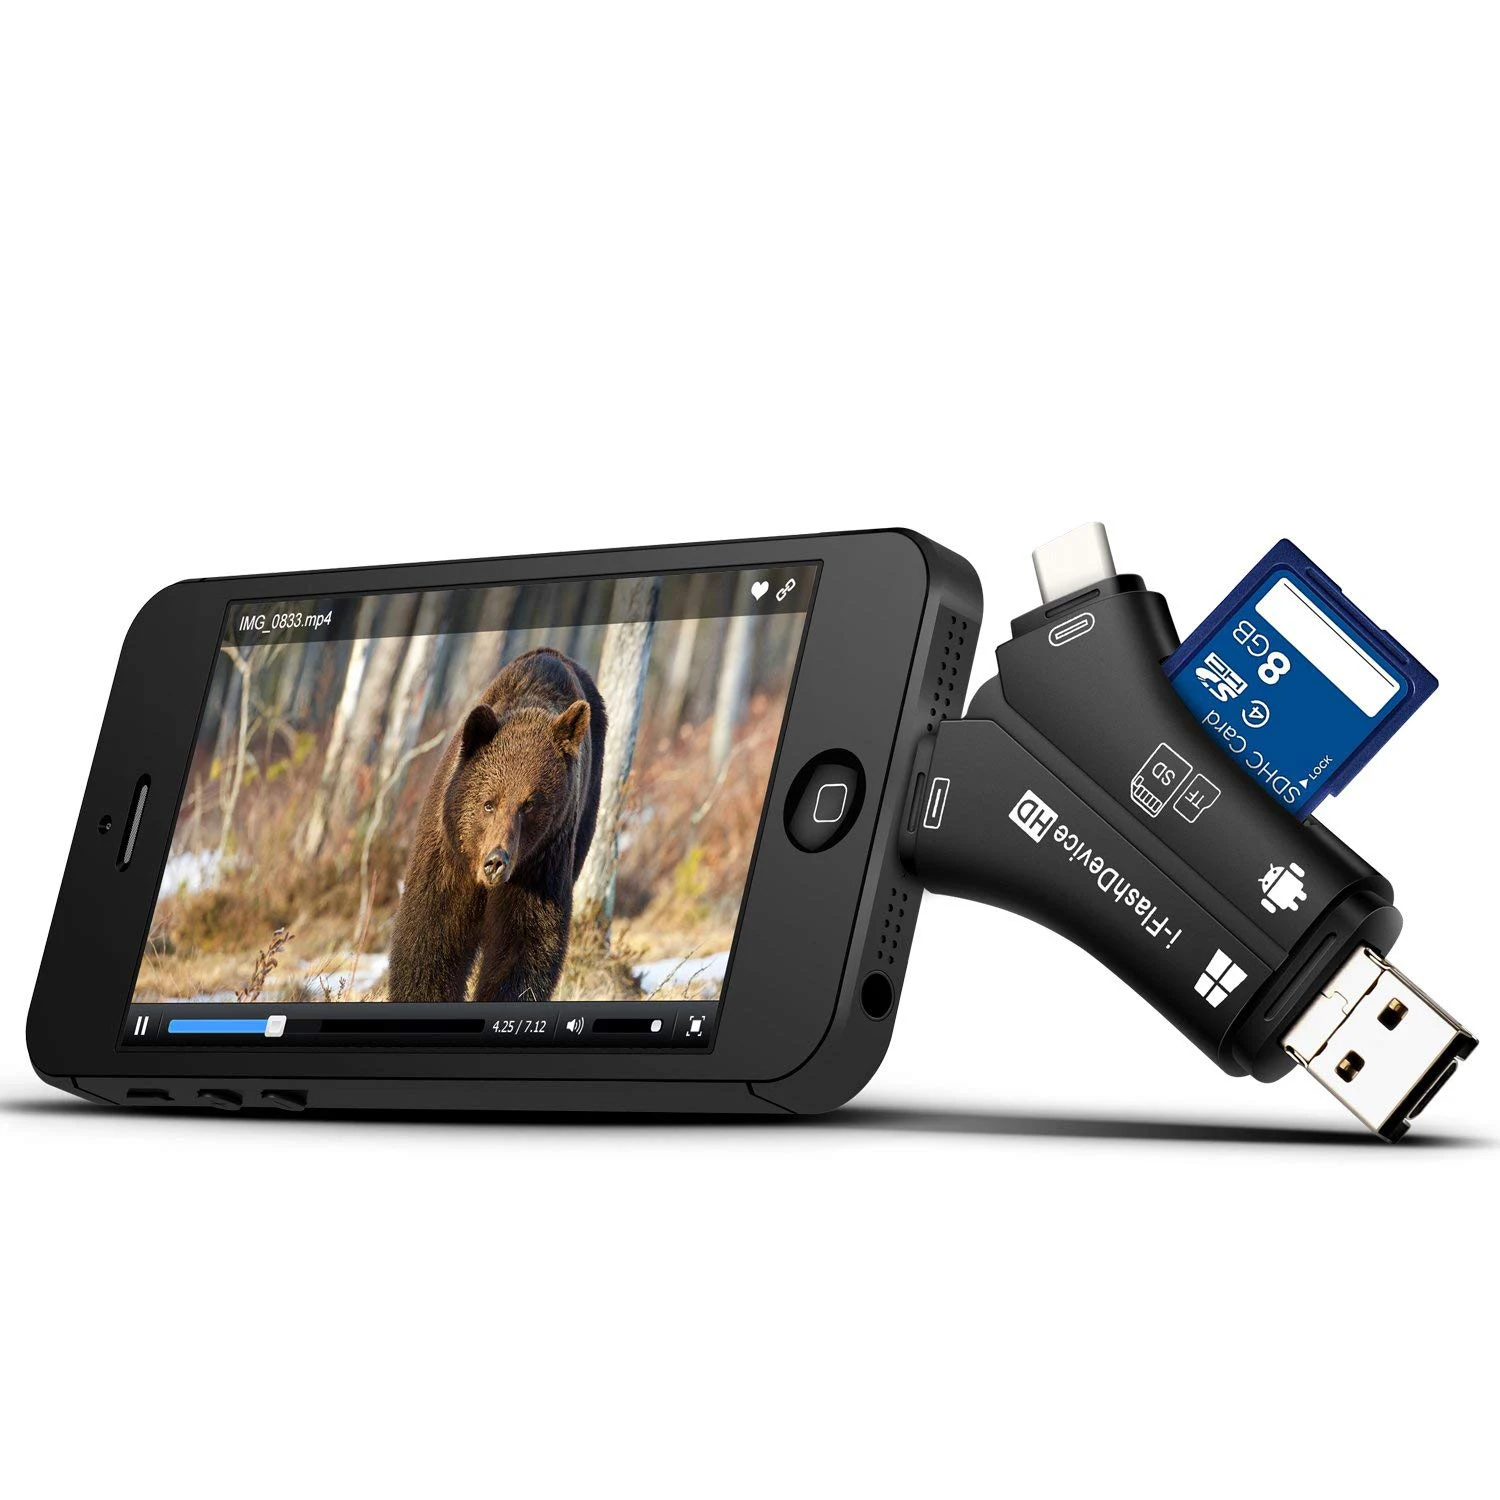 Hot-rail устройство для просмотра фото для iPhone iPad Mac и Android, SD и Micro-SD устройство чтения карт памяти для просмотра фотографий и видео с любого Wildl